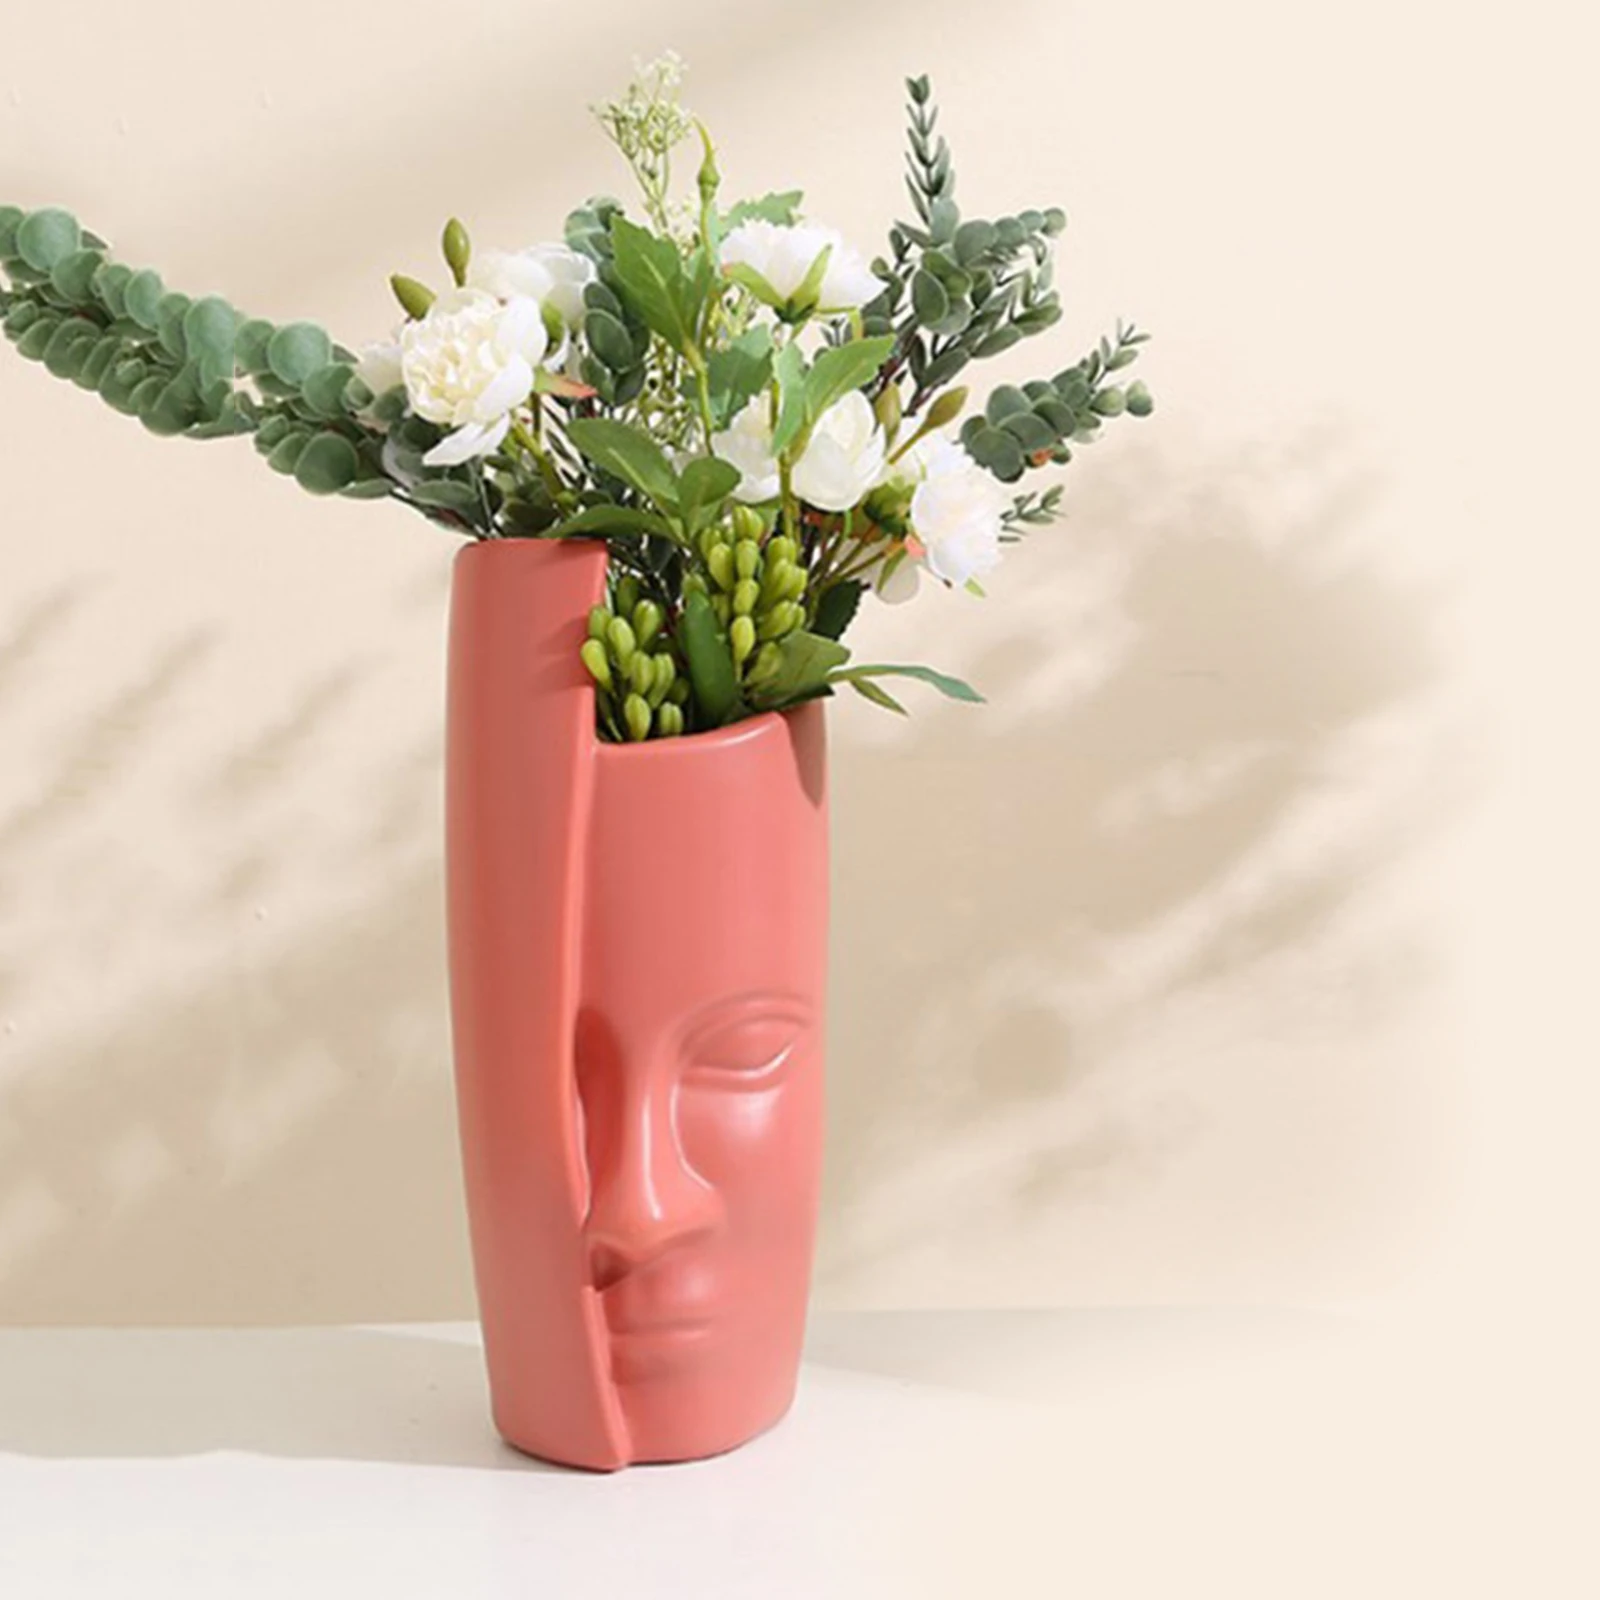 New creative abstract human face art flower pot vase modern living room flower shop decoration ornaments